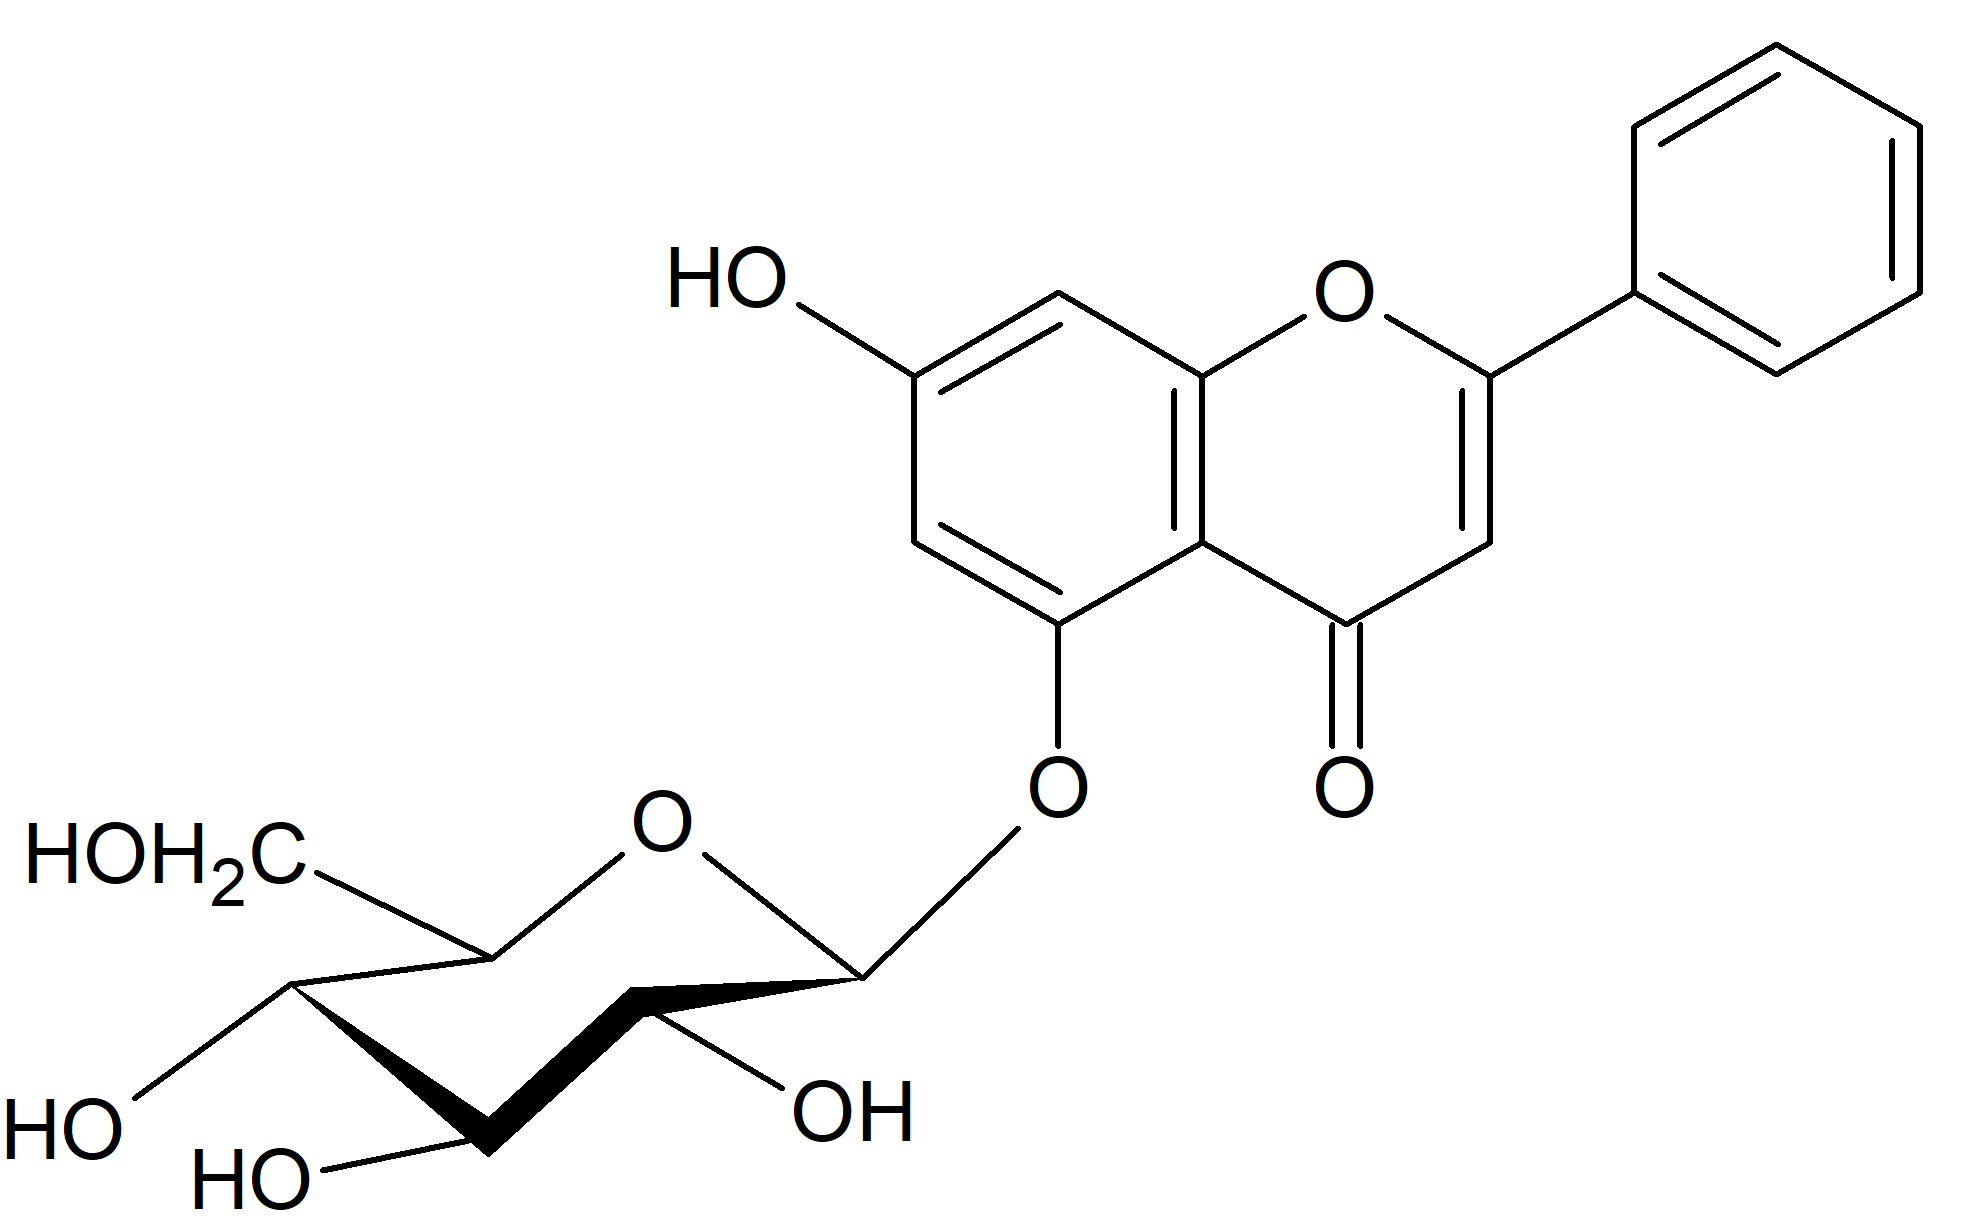 5,7-Dihydroxyflavone 5-glucoside